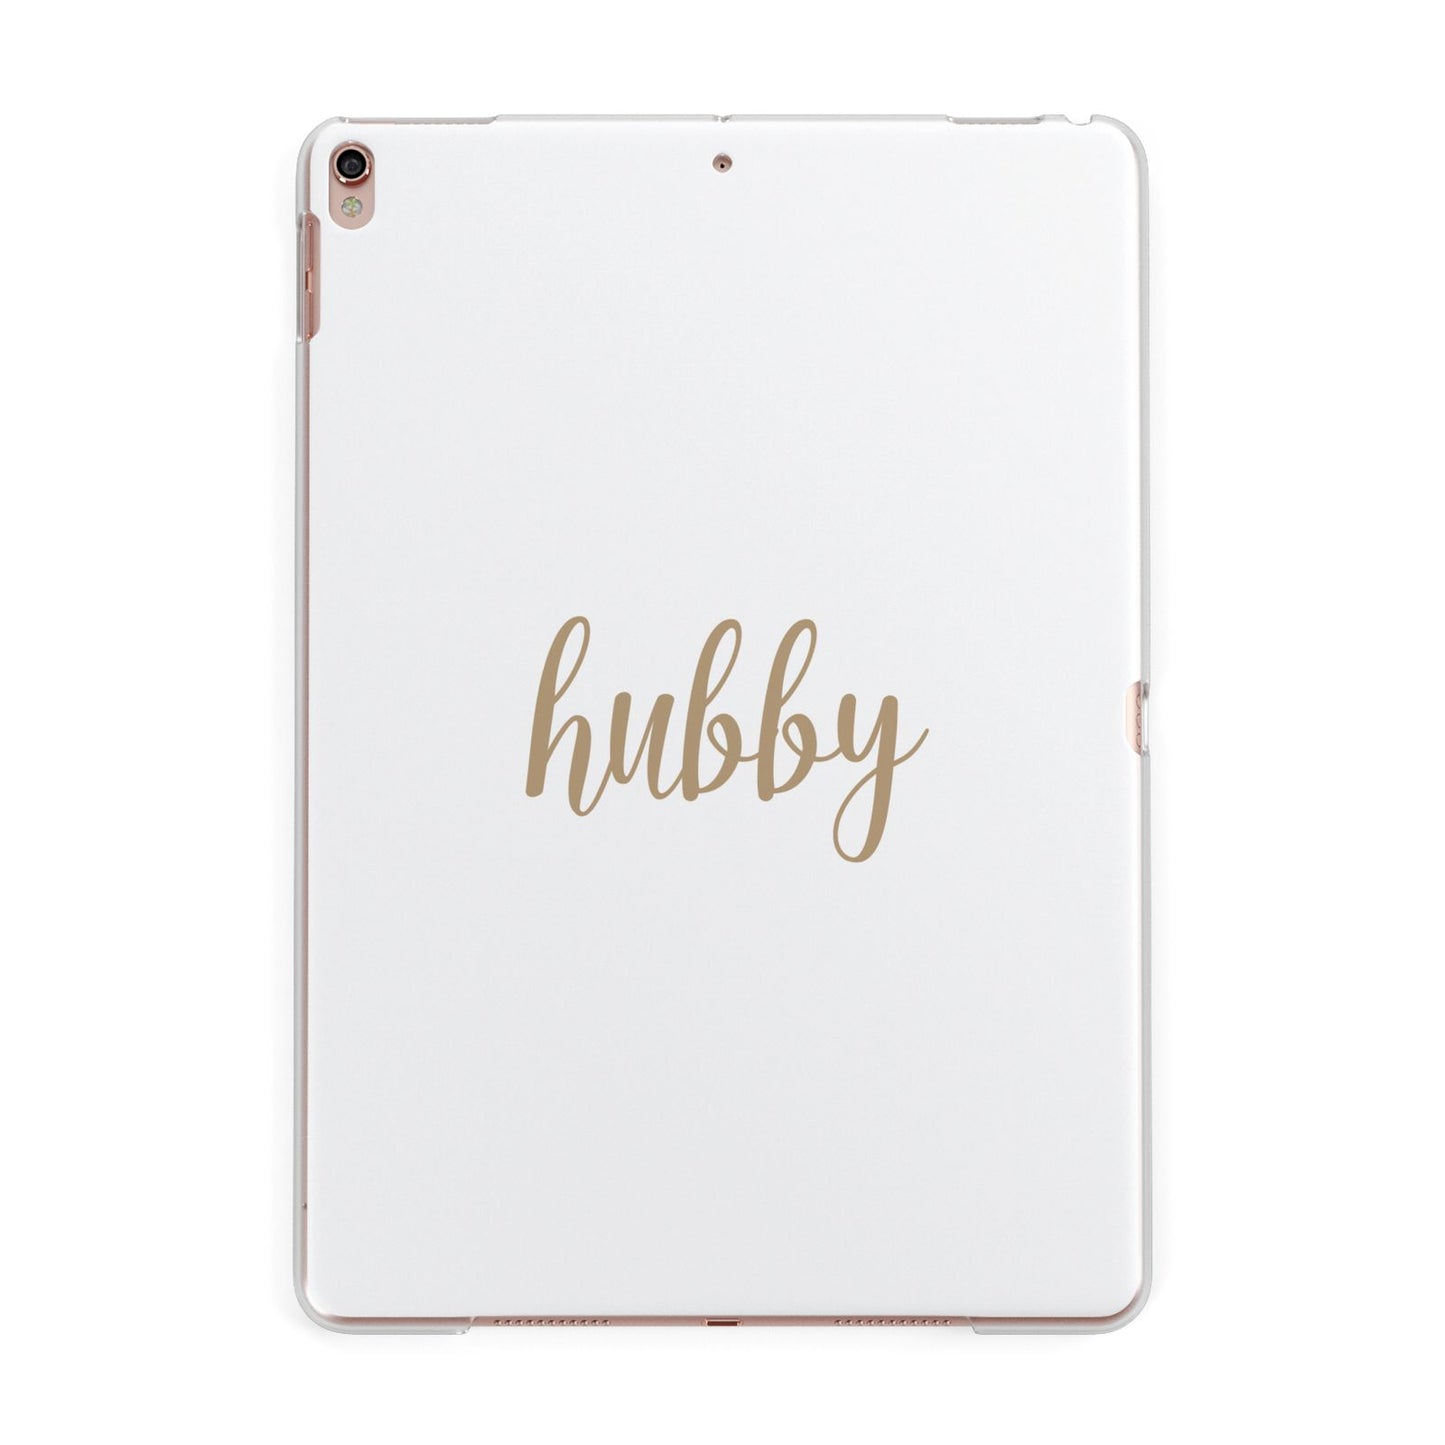 Hubby Apple iPad Rose Gold Case